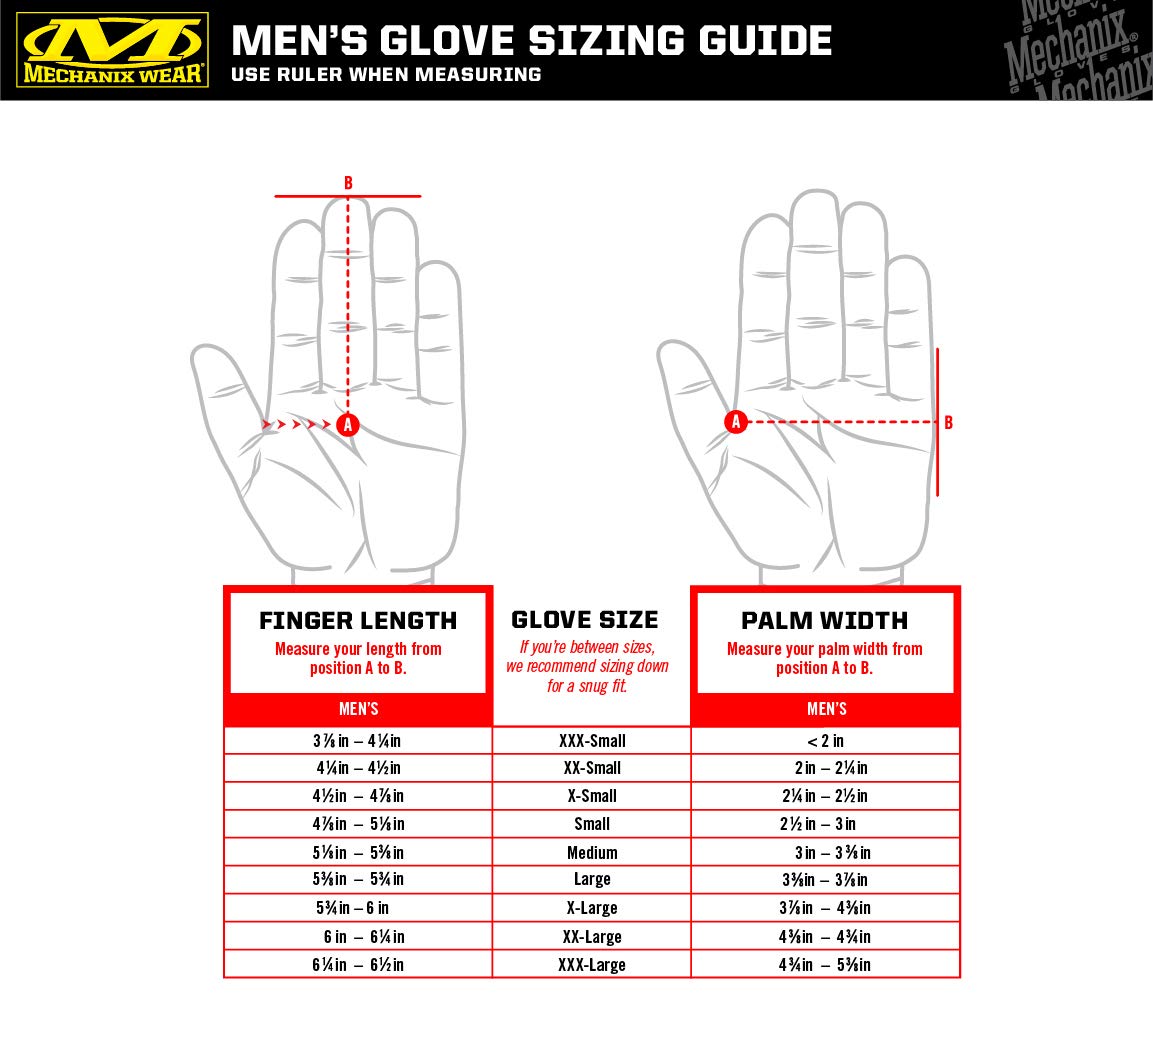 Mechanix Wear - Original Work Gloves (XX-Large, Black) - MPR Tools & Equipment